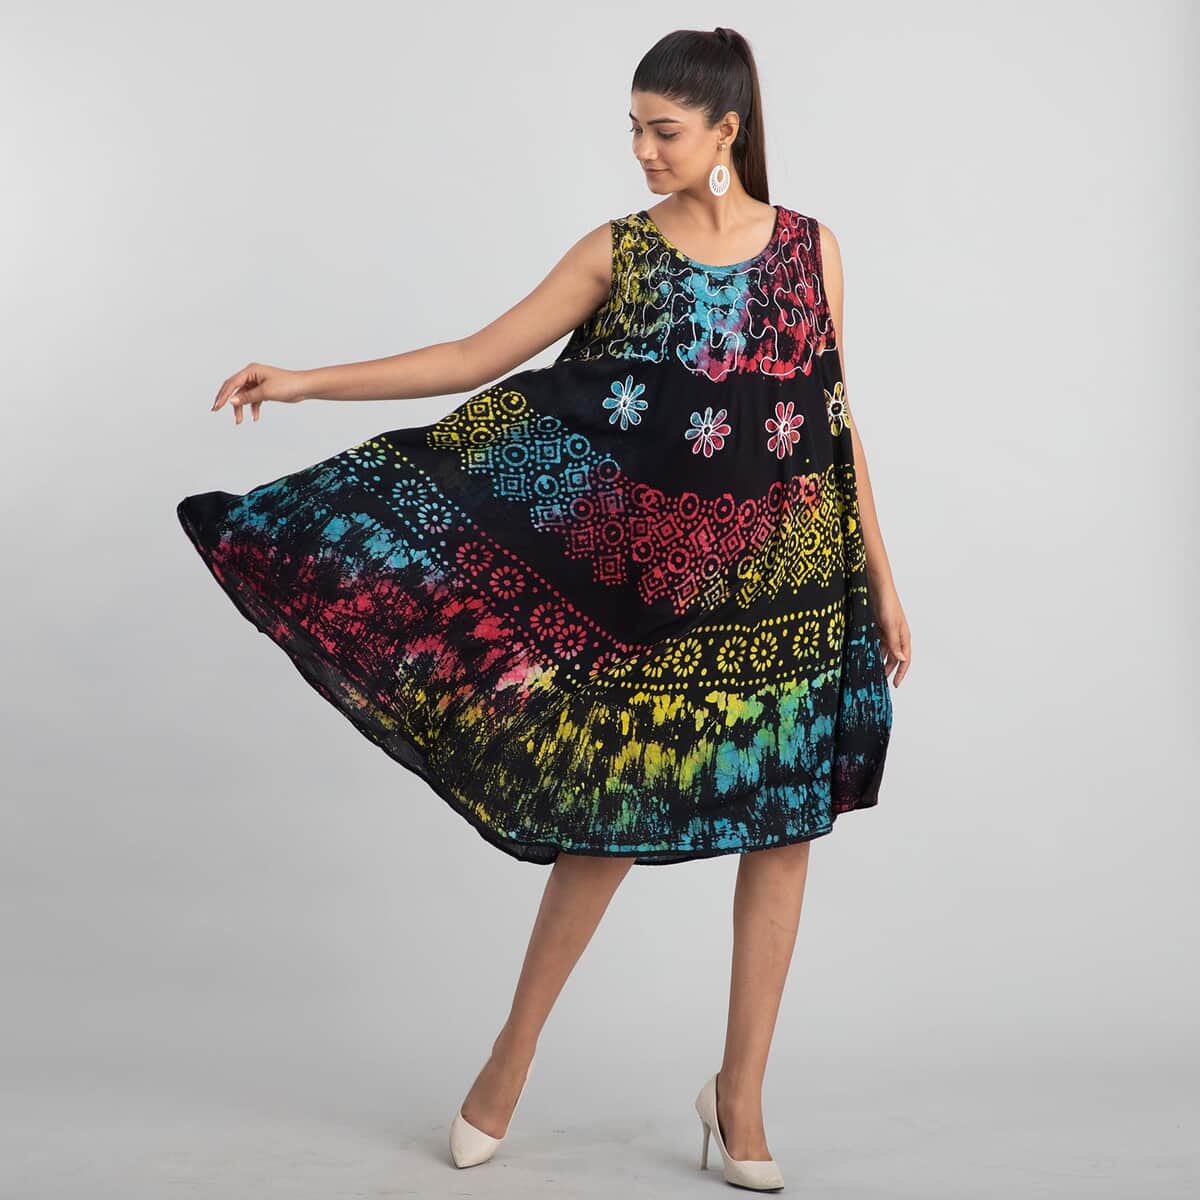 TAMSY Rainbow and Black Splatter Print Umbrella Dress - One Size Fits Most (48"L x 44"W) image number 3